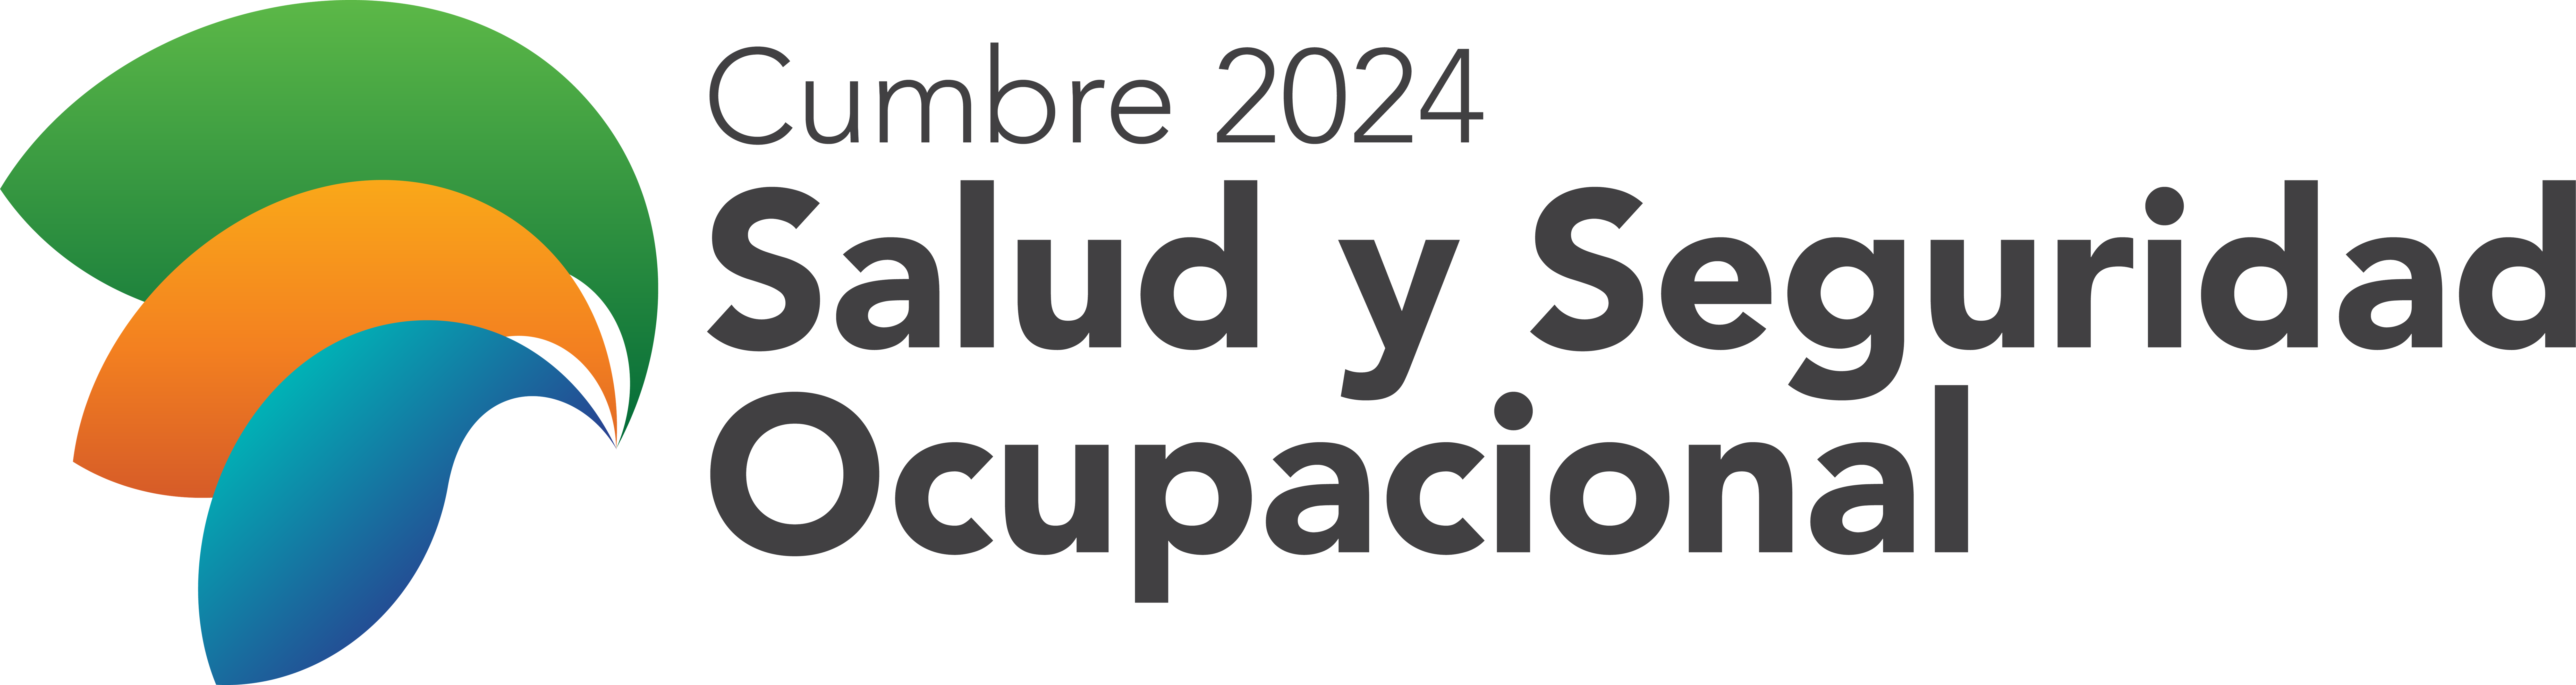 Cumbre Salud Seguridad Ocupacional 2024 Logo